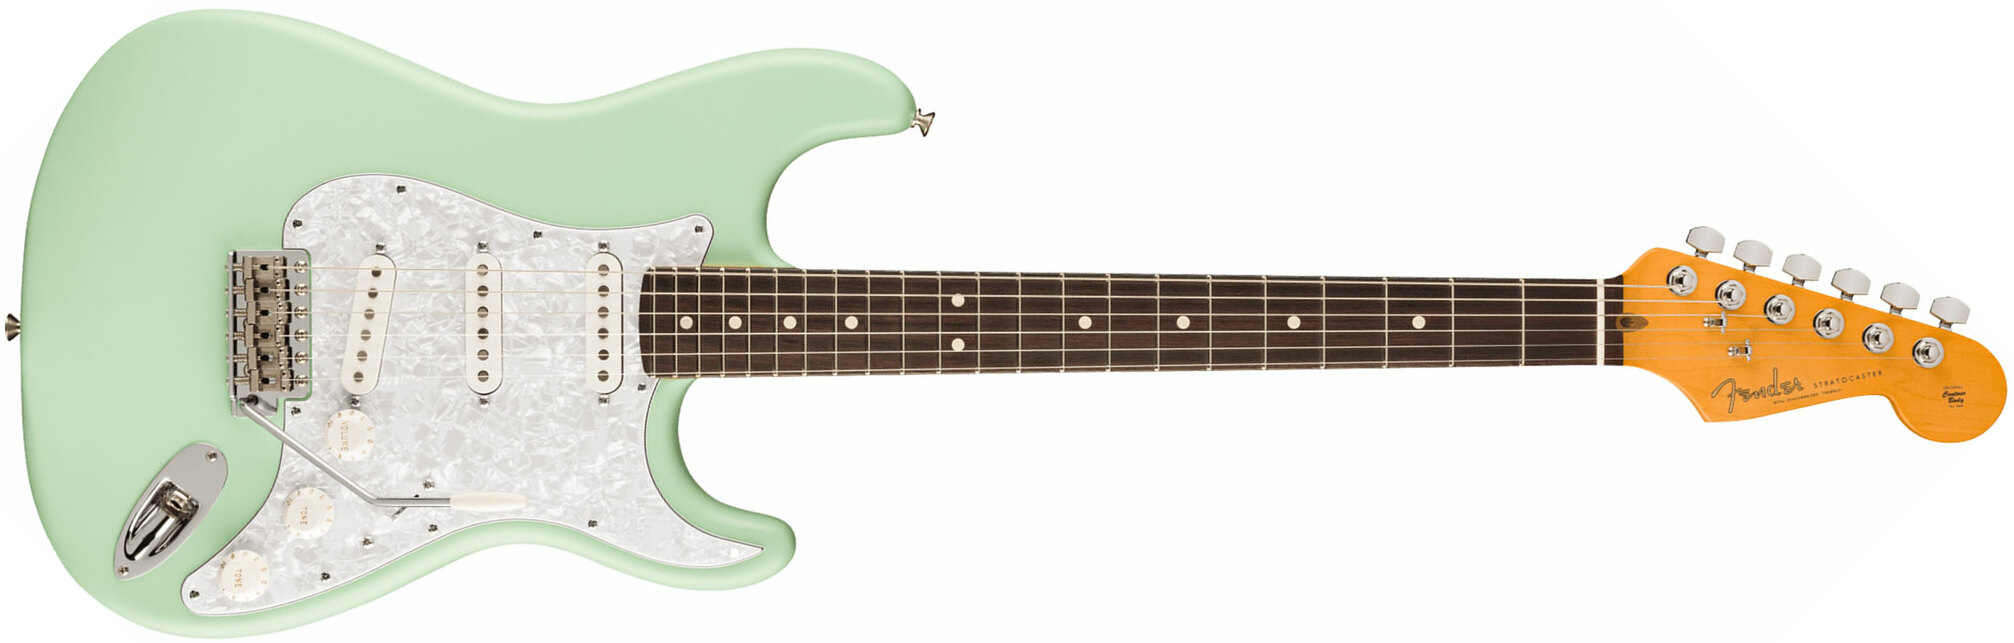 Fender Cory Wong Strat Ltd Signature Usa Stss Trem Rw - Surf Green - E-Gitarre in Str-Form - Main picture